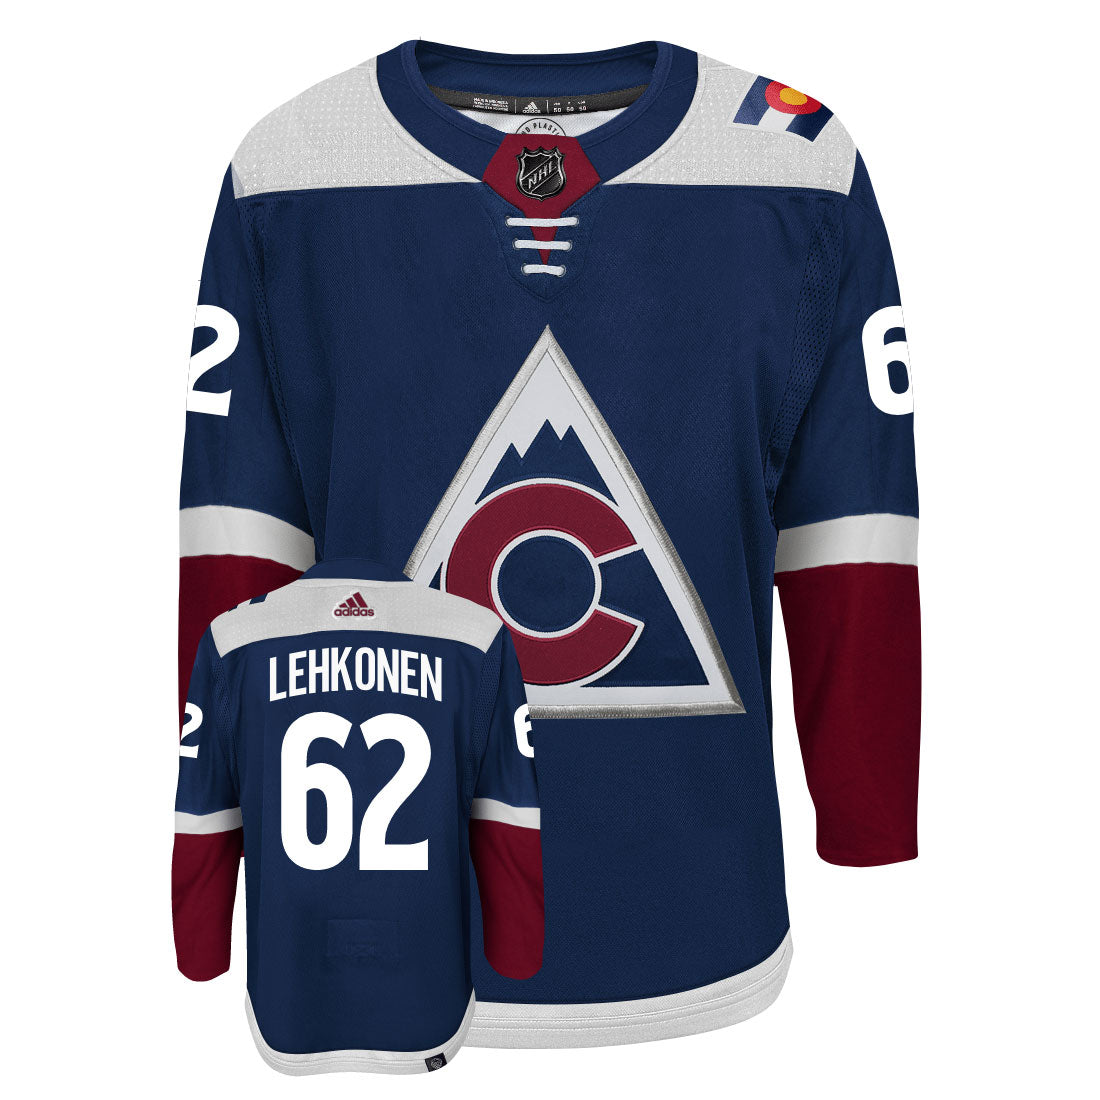 Arturri Lehkonen Colorado Avalanche Adidas Primegreen Authentic Third Alternate NHL Hockey Jersey - Front/Back View